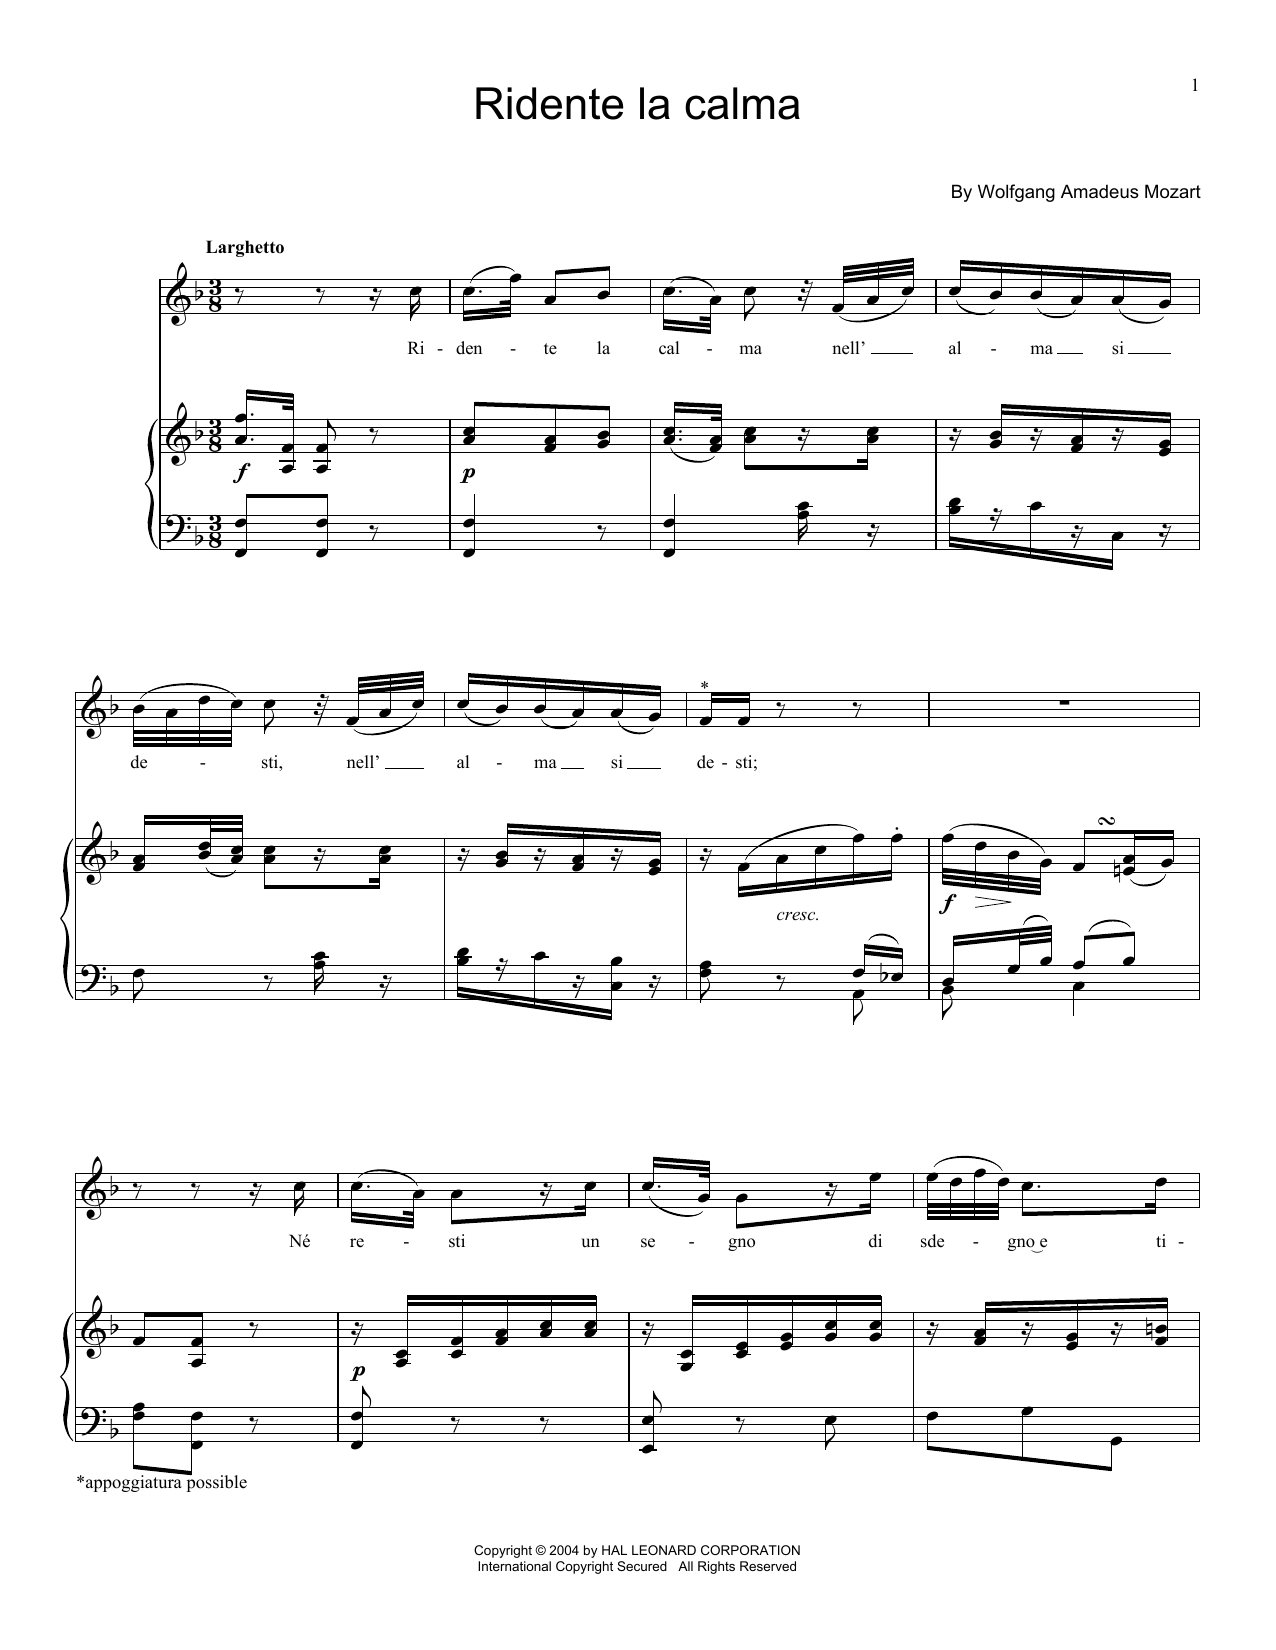 Wolfgang Amadeus Mozart Ridente La Calma, K. 152 Sheet Music Notes & Chords for Piano & Vocal - Download or Print PDF